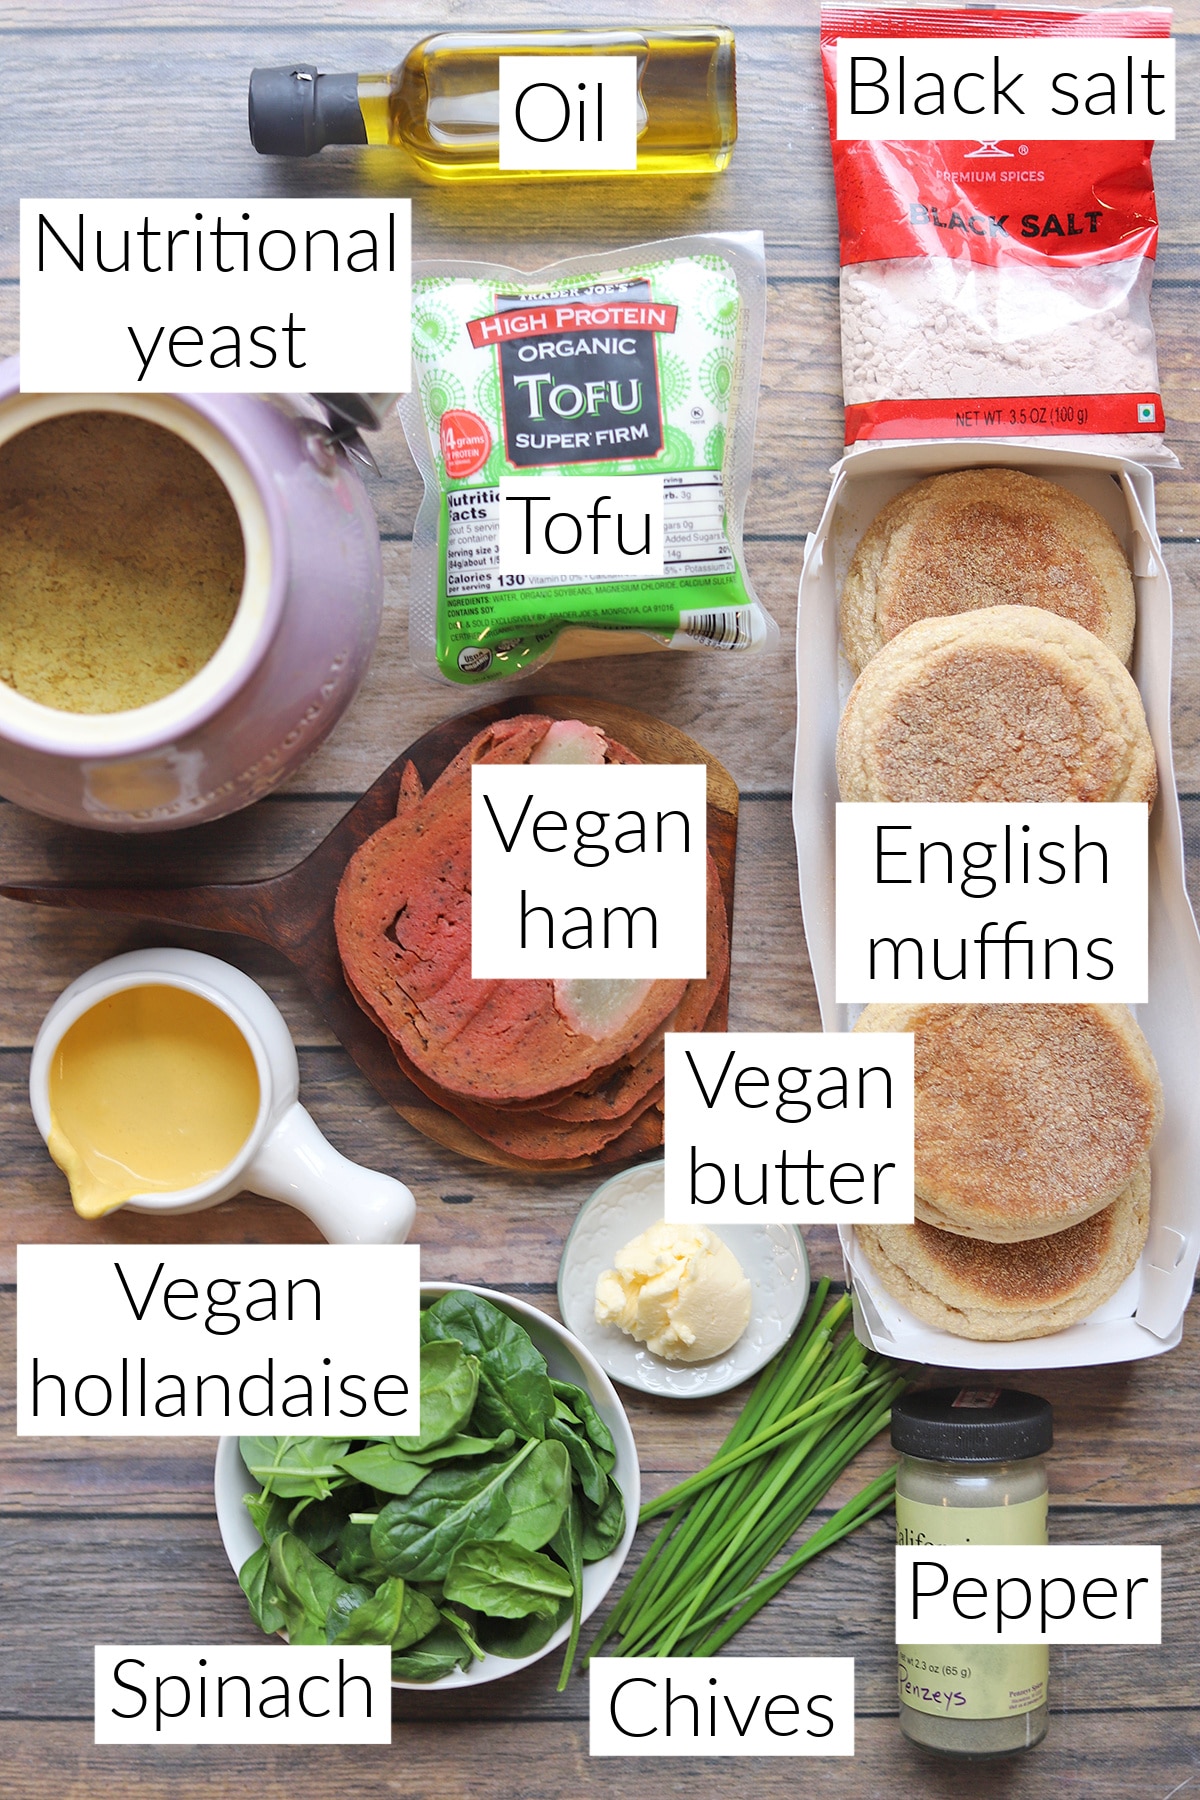 Labeled ingredients for vegan eggs Benedict.